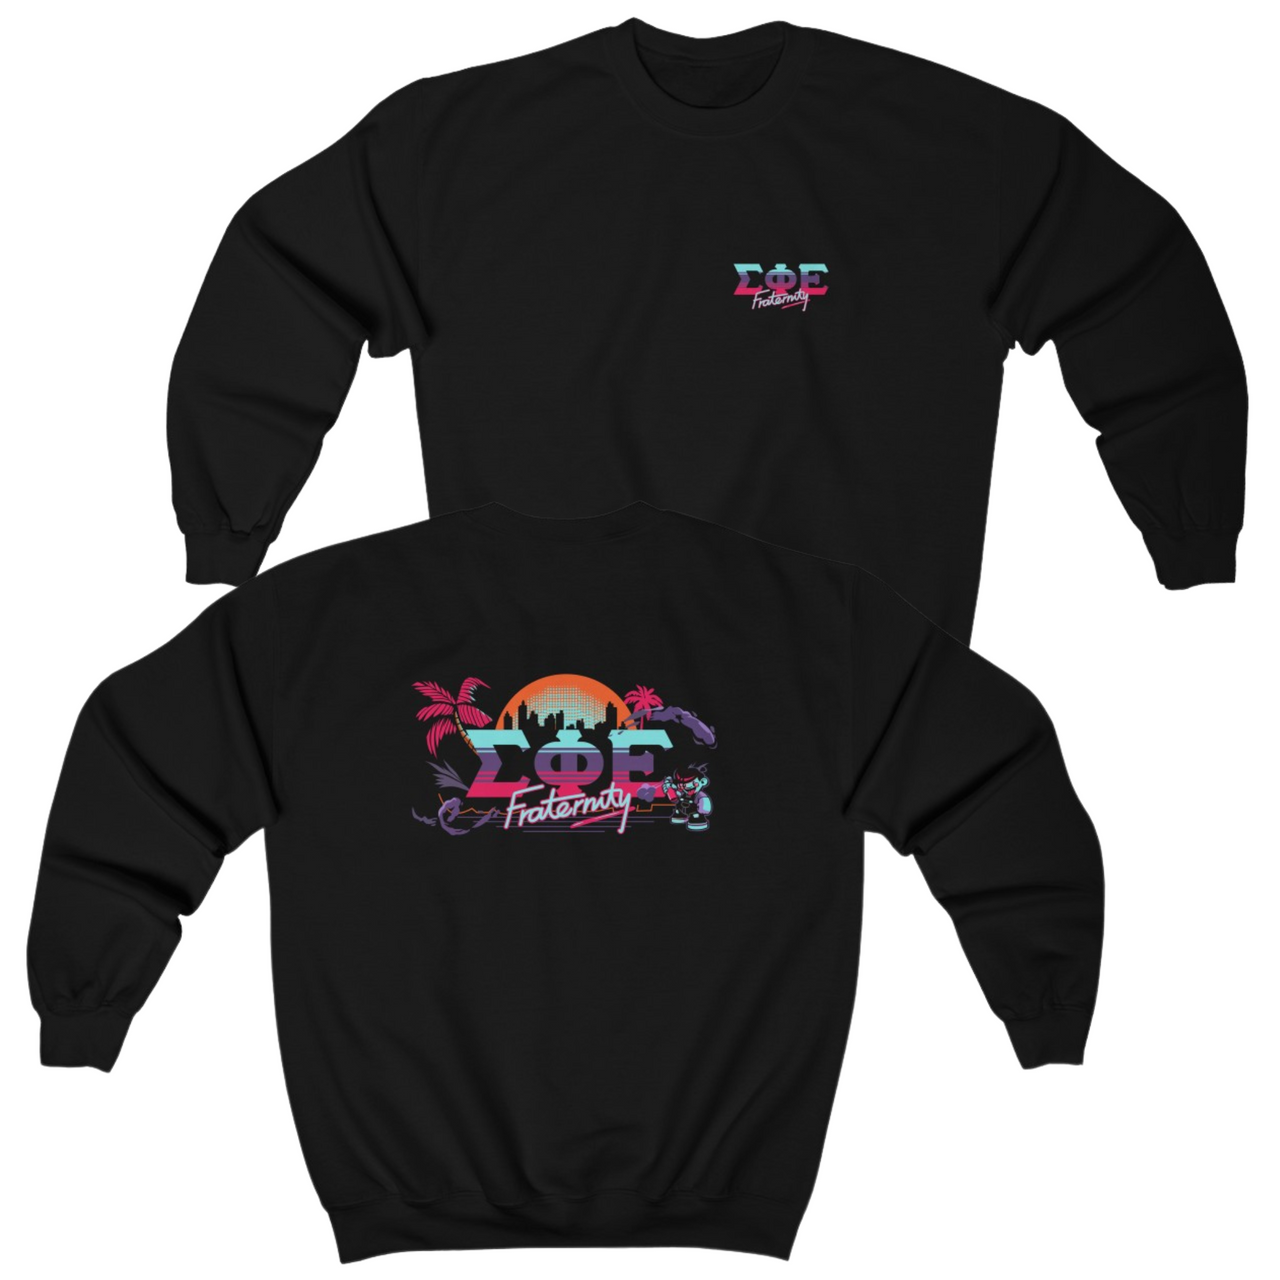 Black Sigma Phi Epsilon Graphic Crewneck Sweatshirt | Jump Street | SigEp Clothing - Campus Apparel